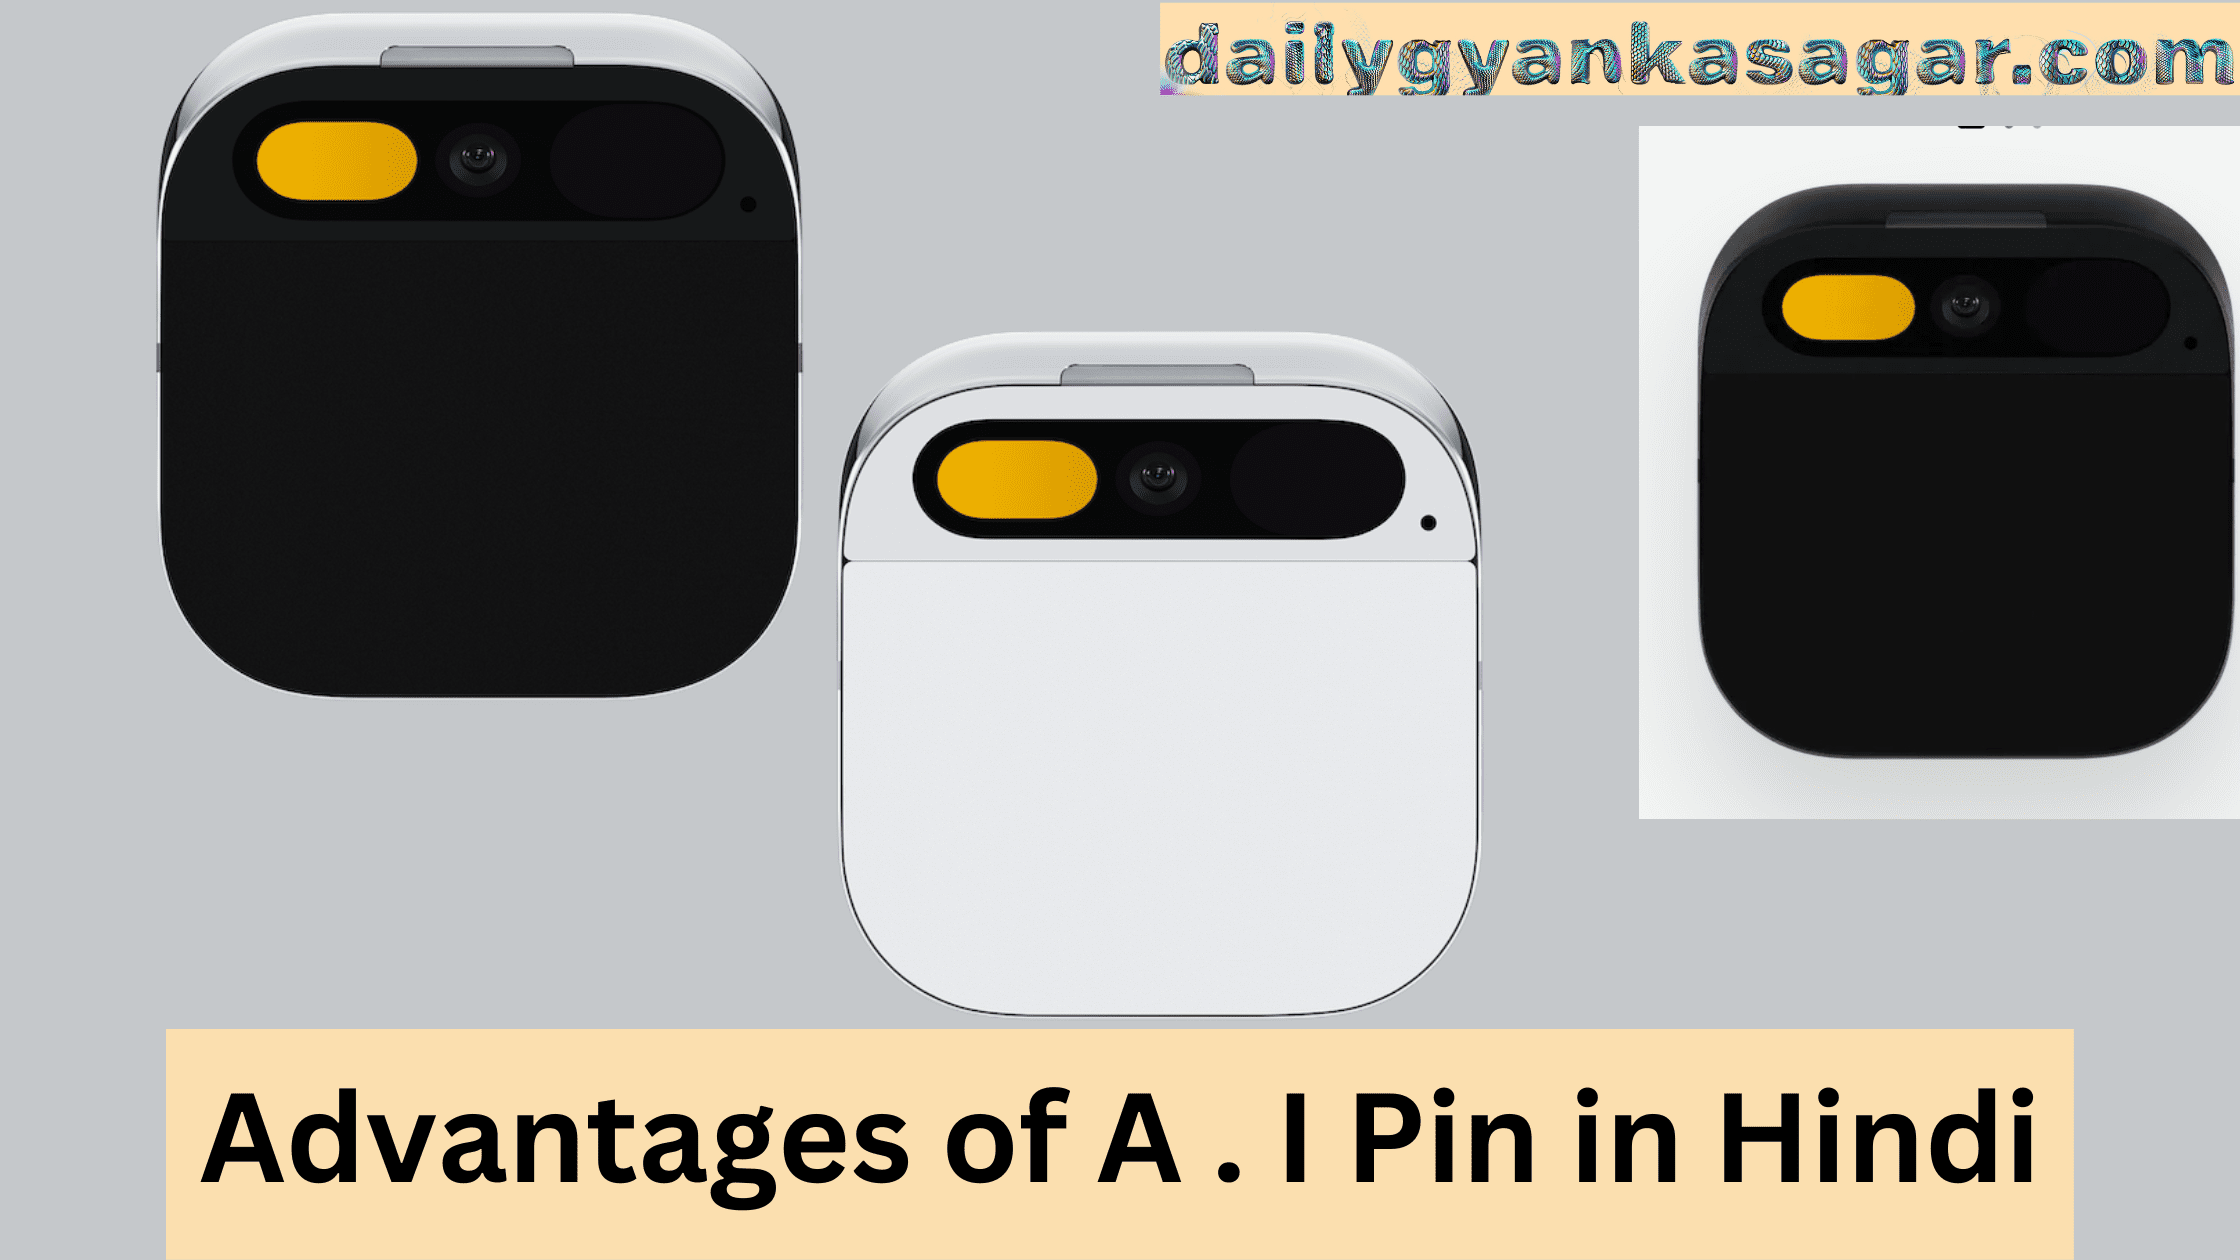 Advantages of A . I Pin in Hindi